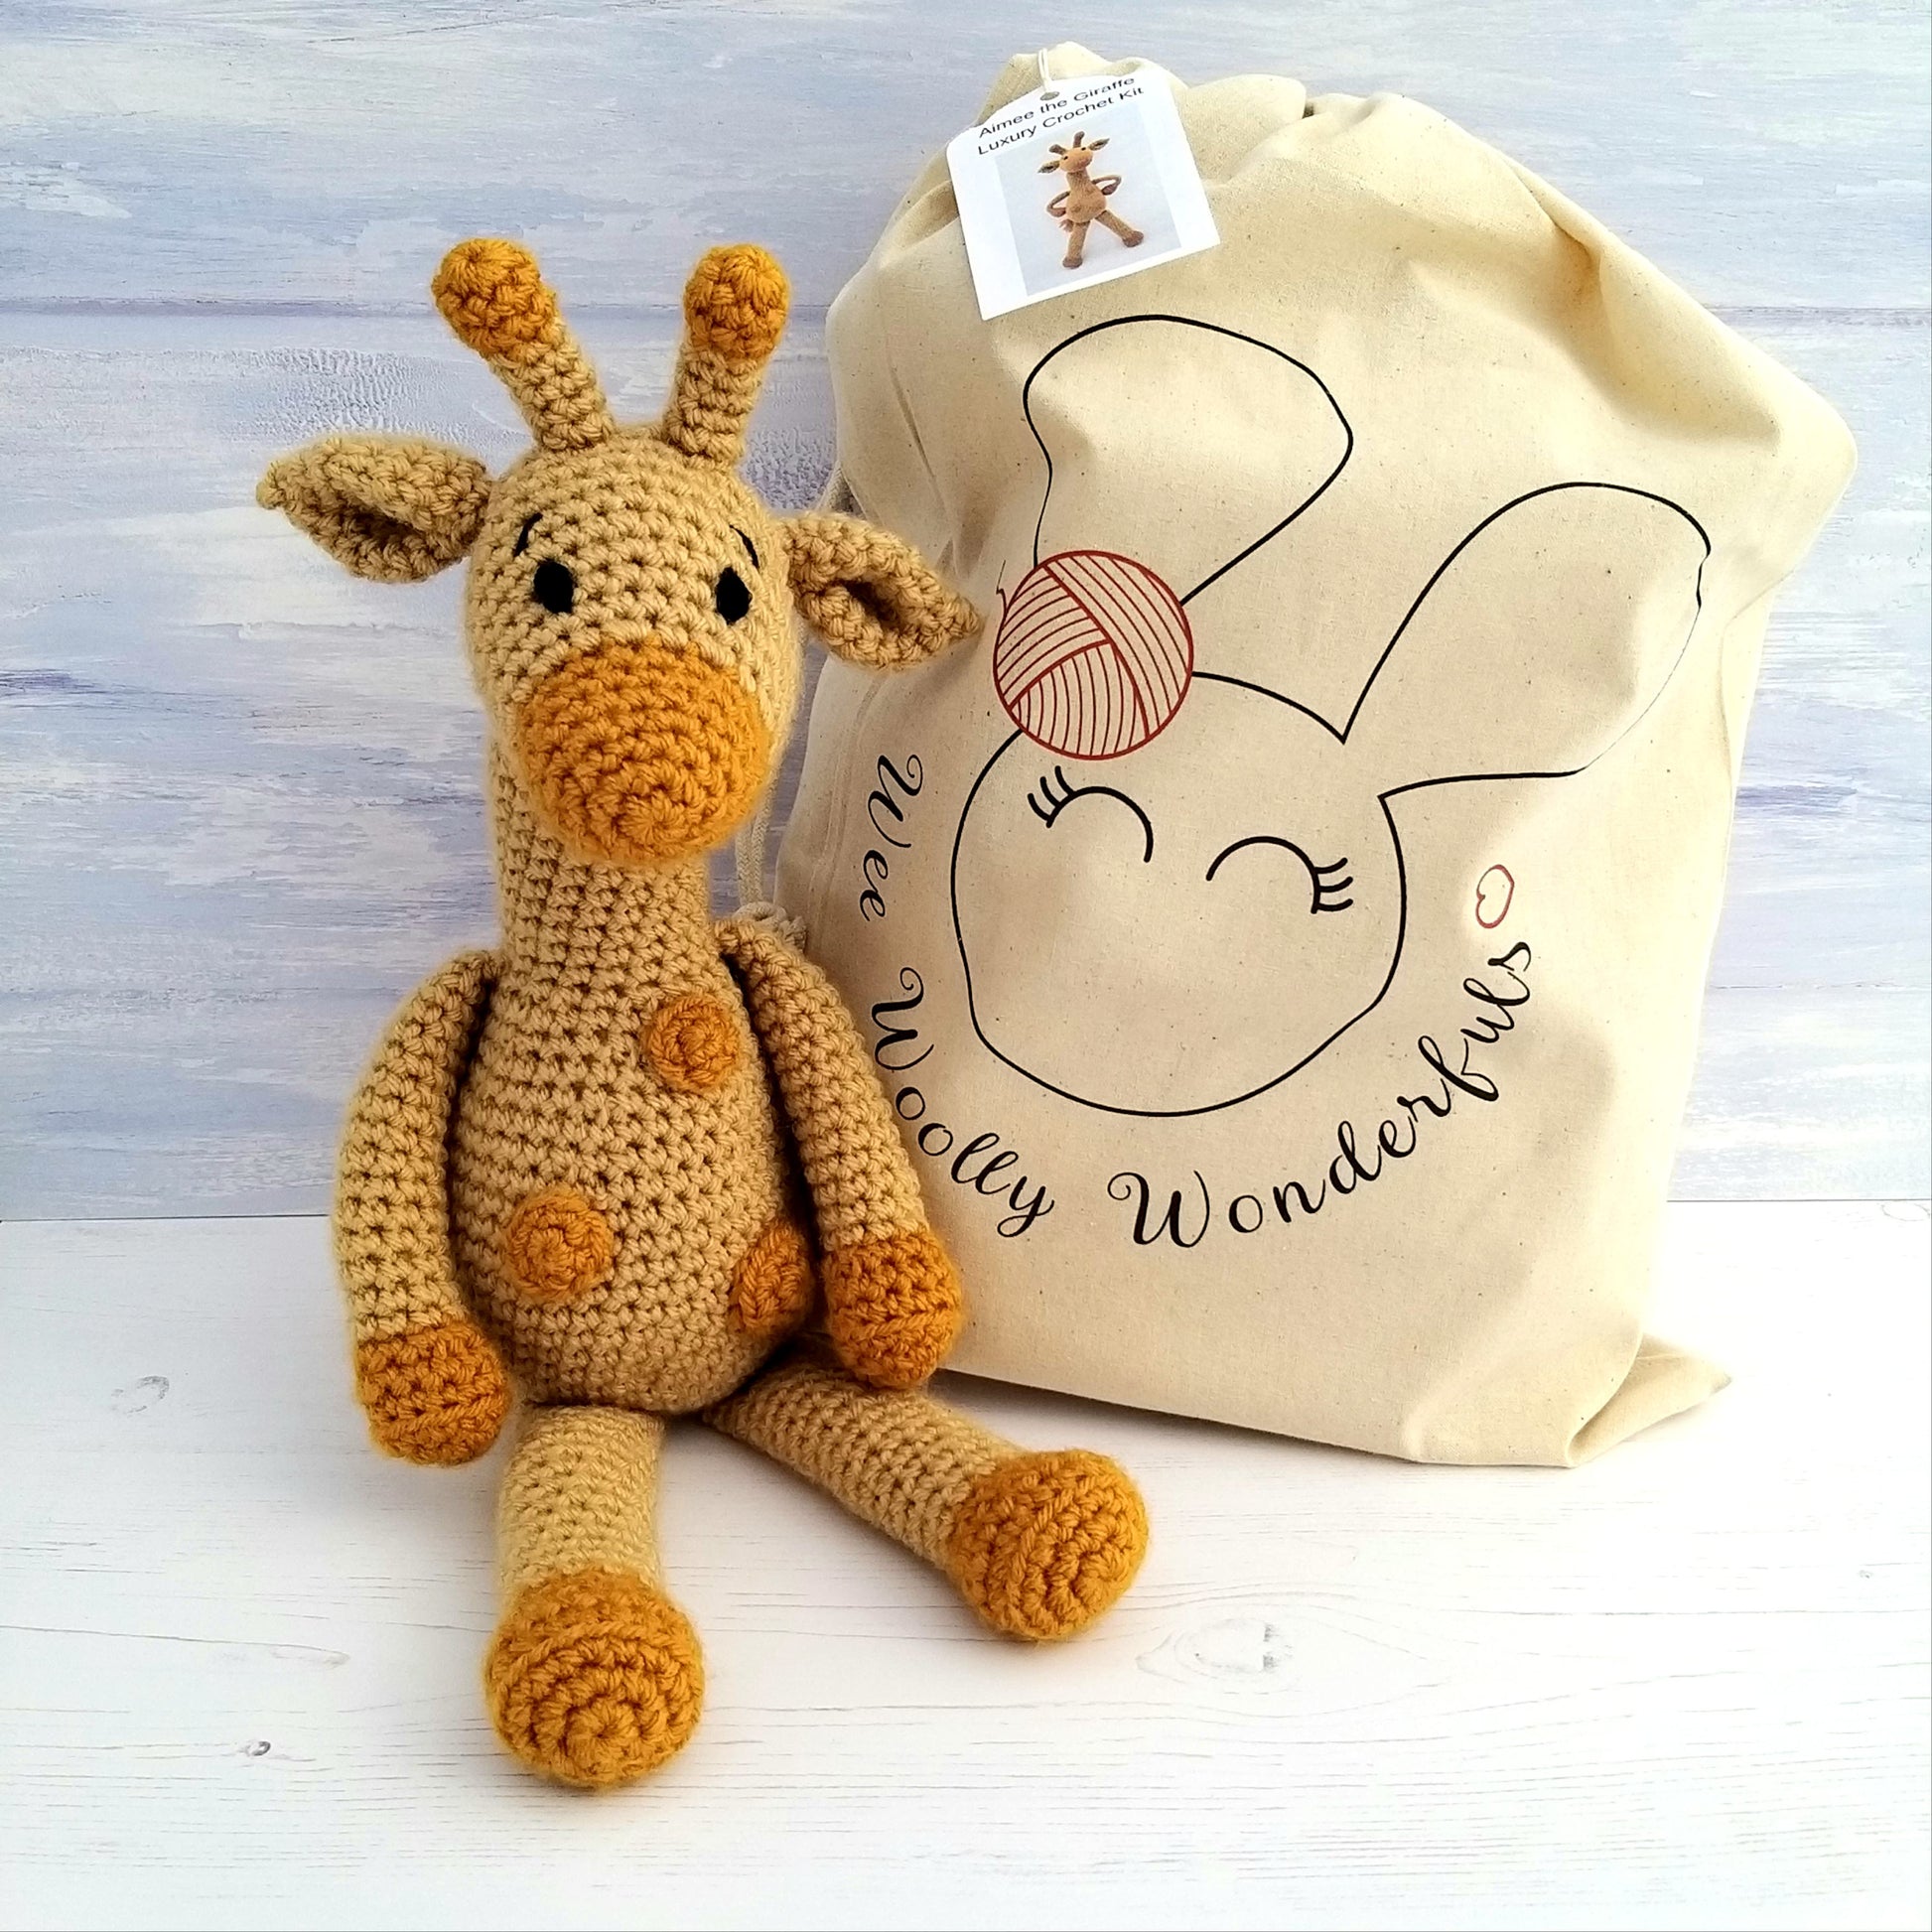 Giraffe Crochet Kit for Beginners with Video – Wee Woolly Wonderfuls